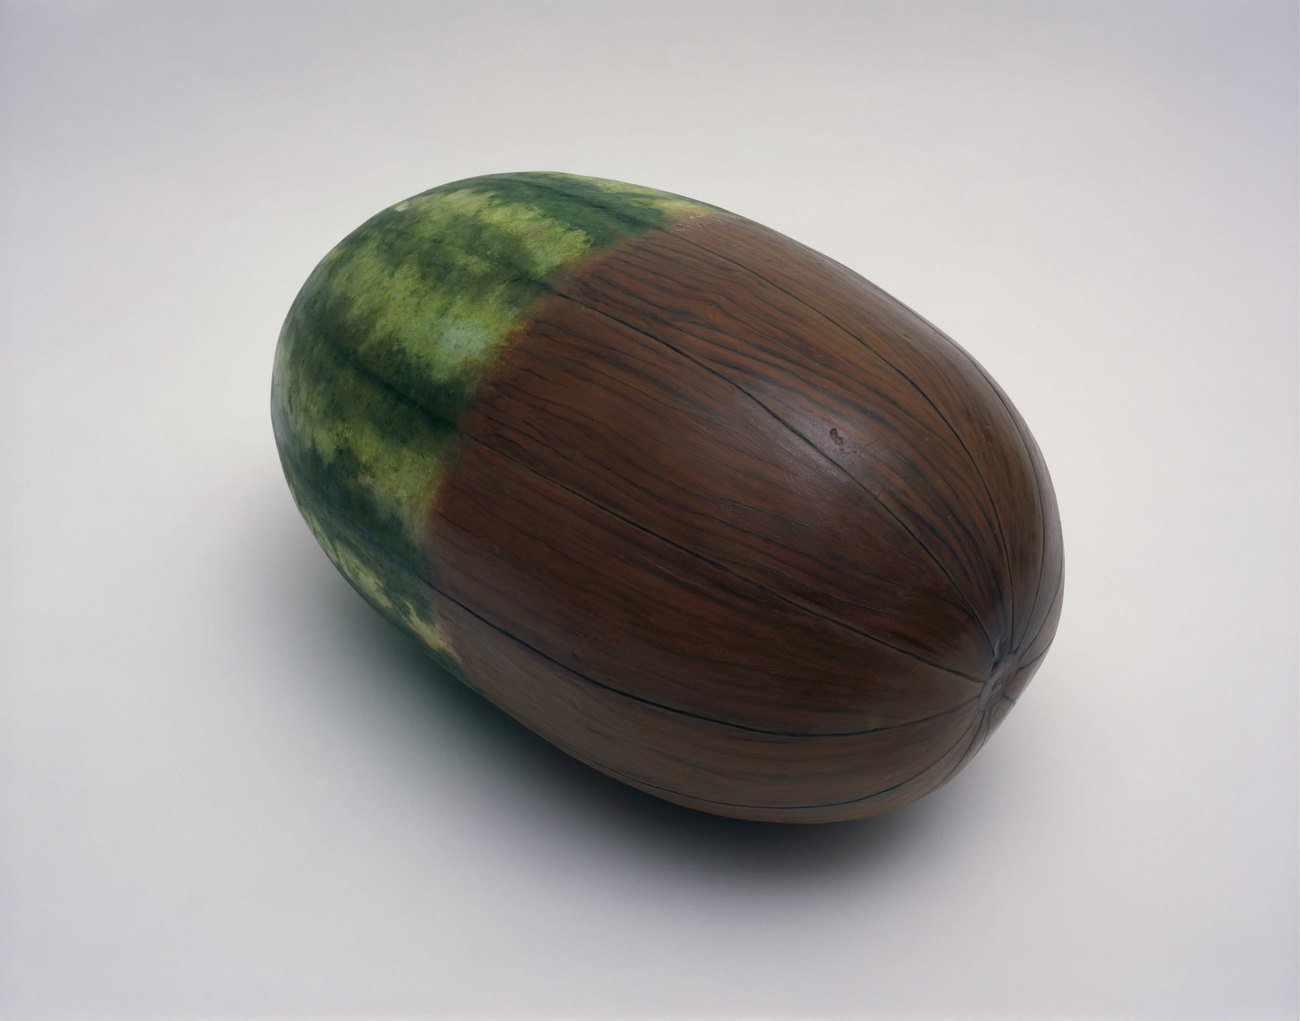 Wood ‘n’ Melon